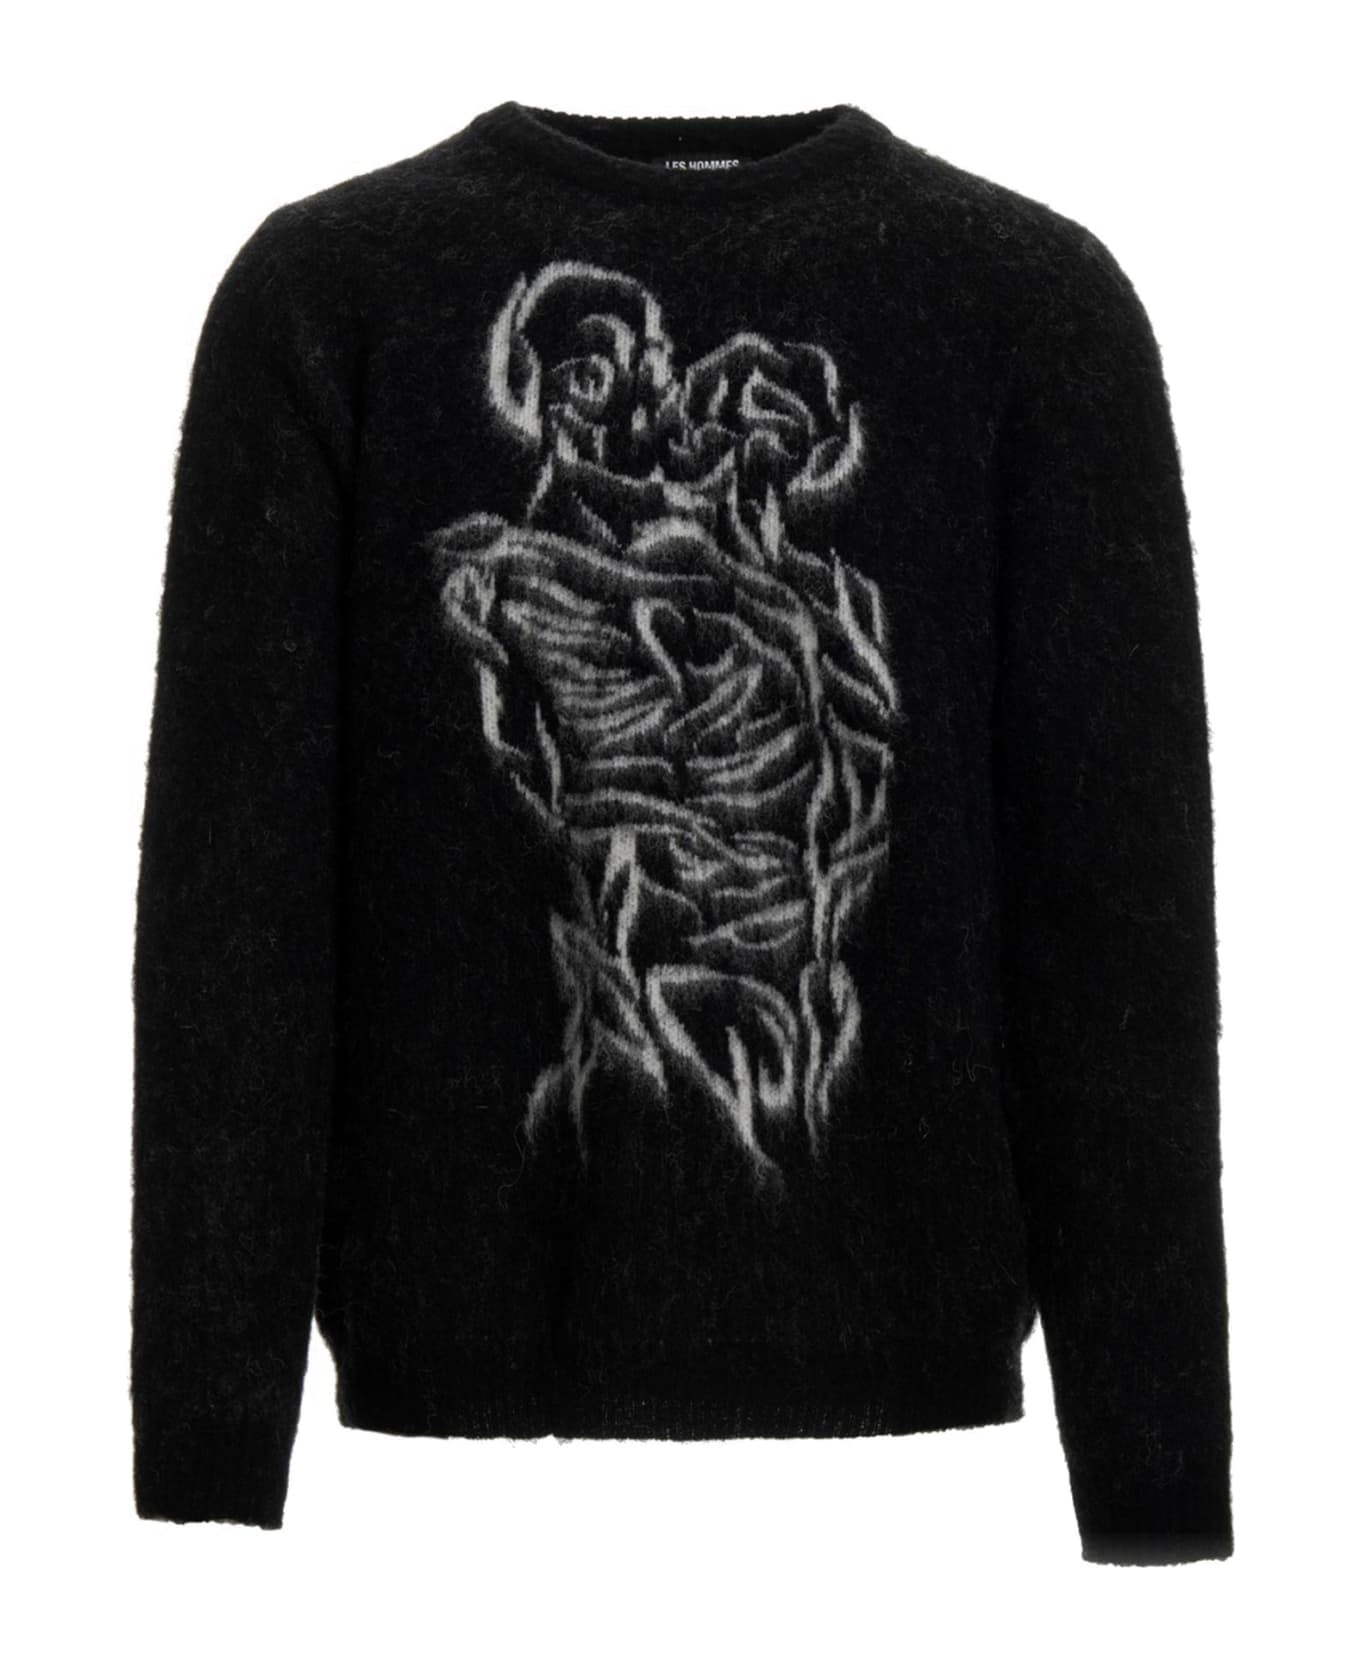 Les Hommes Sweater - BLACK BUTTER